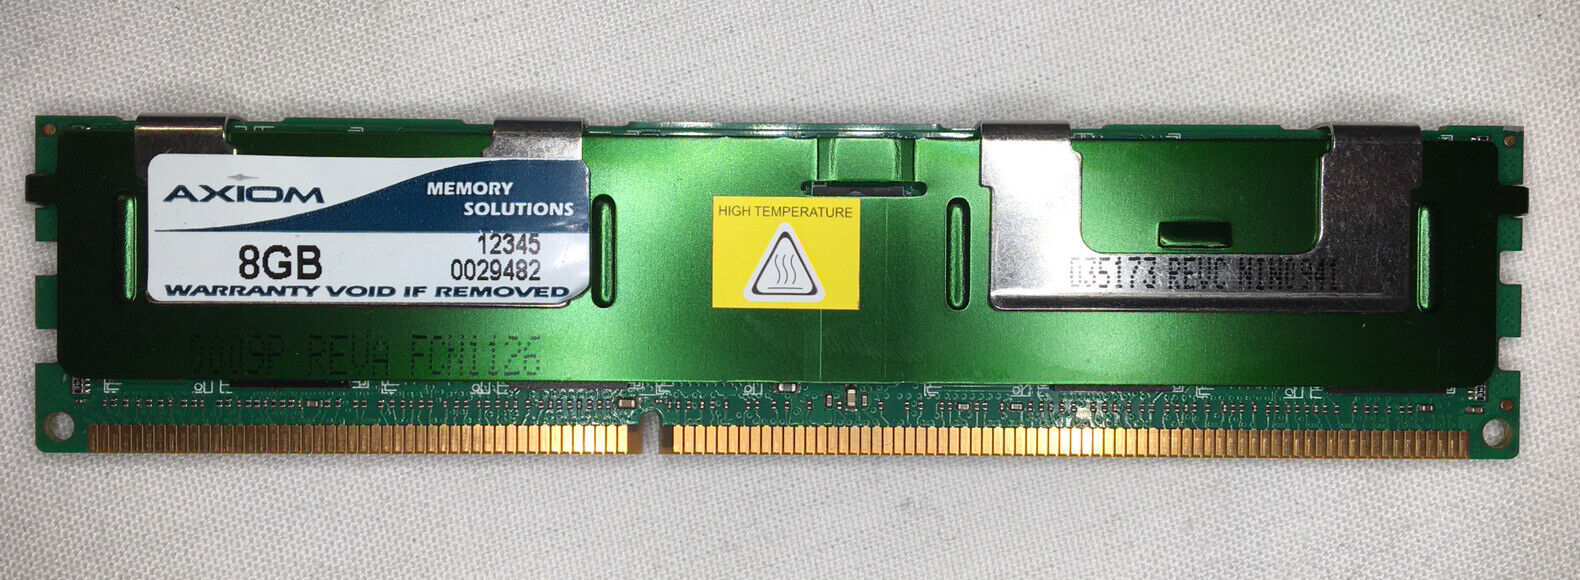 Axiom D35173 8GB (1x 8GB) DDR3 1066Mhz 240 Pin ECC Server Memory RAM